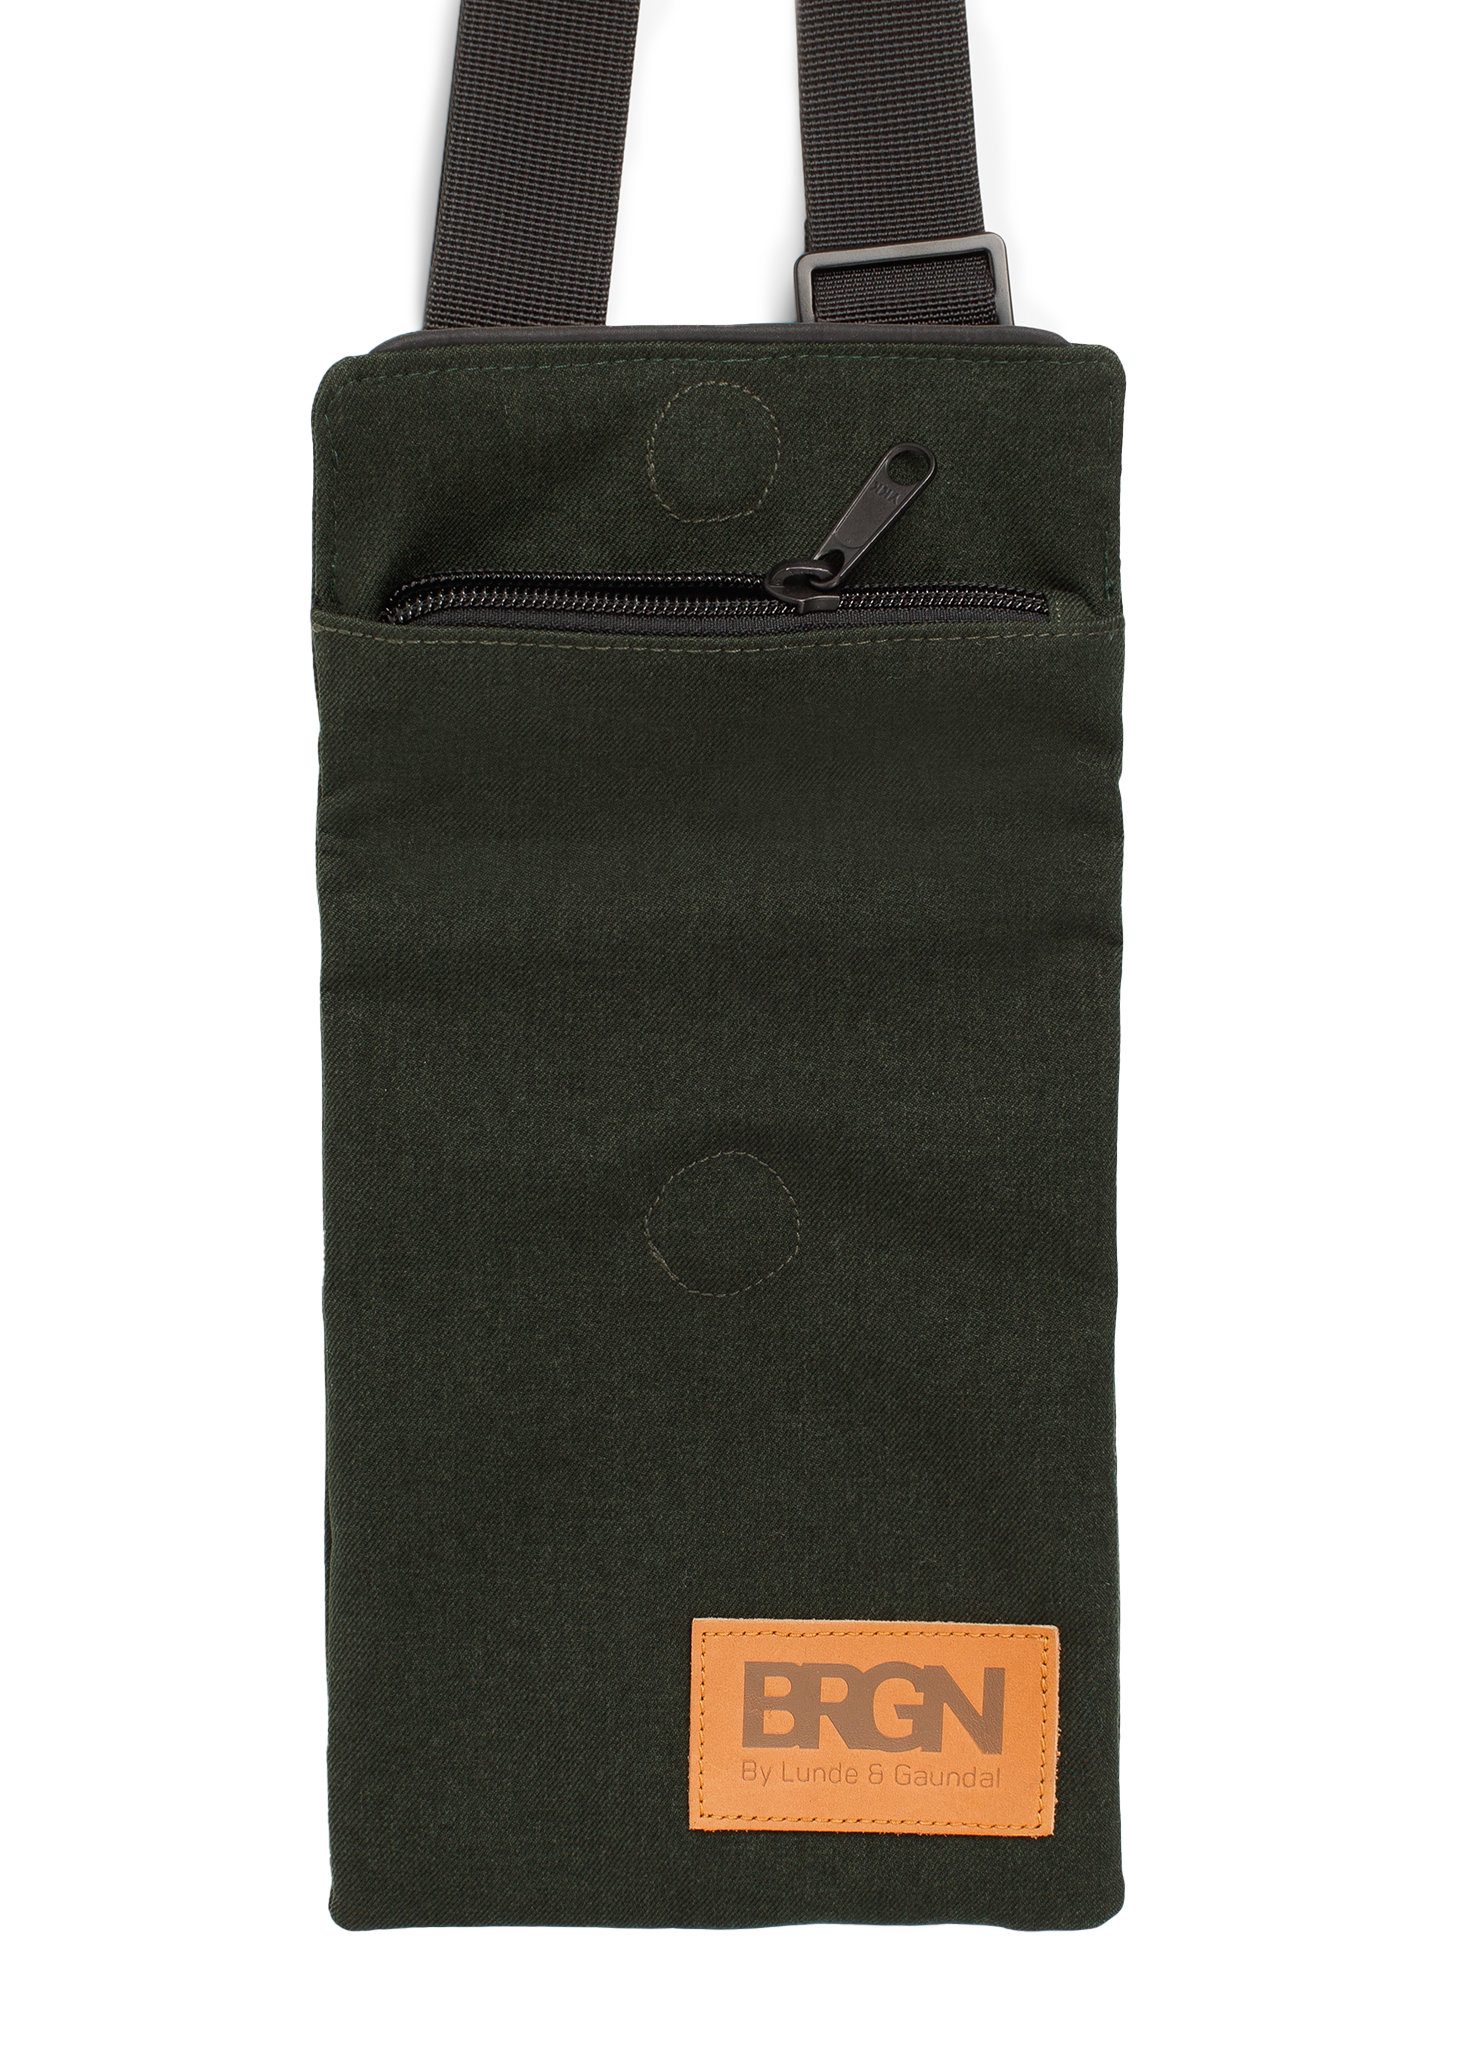 BRGN by Lunde & Gaundal Messenger Purse Accessories 880 Rosin Dark Green